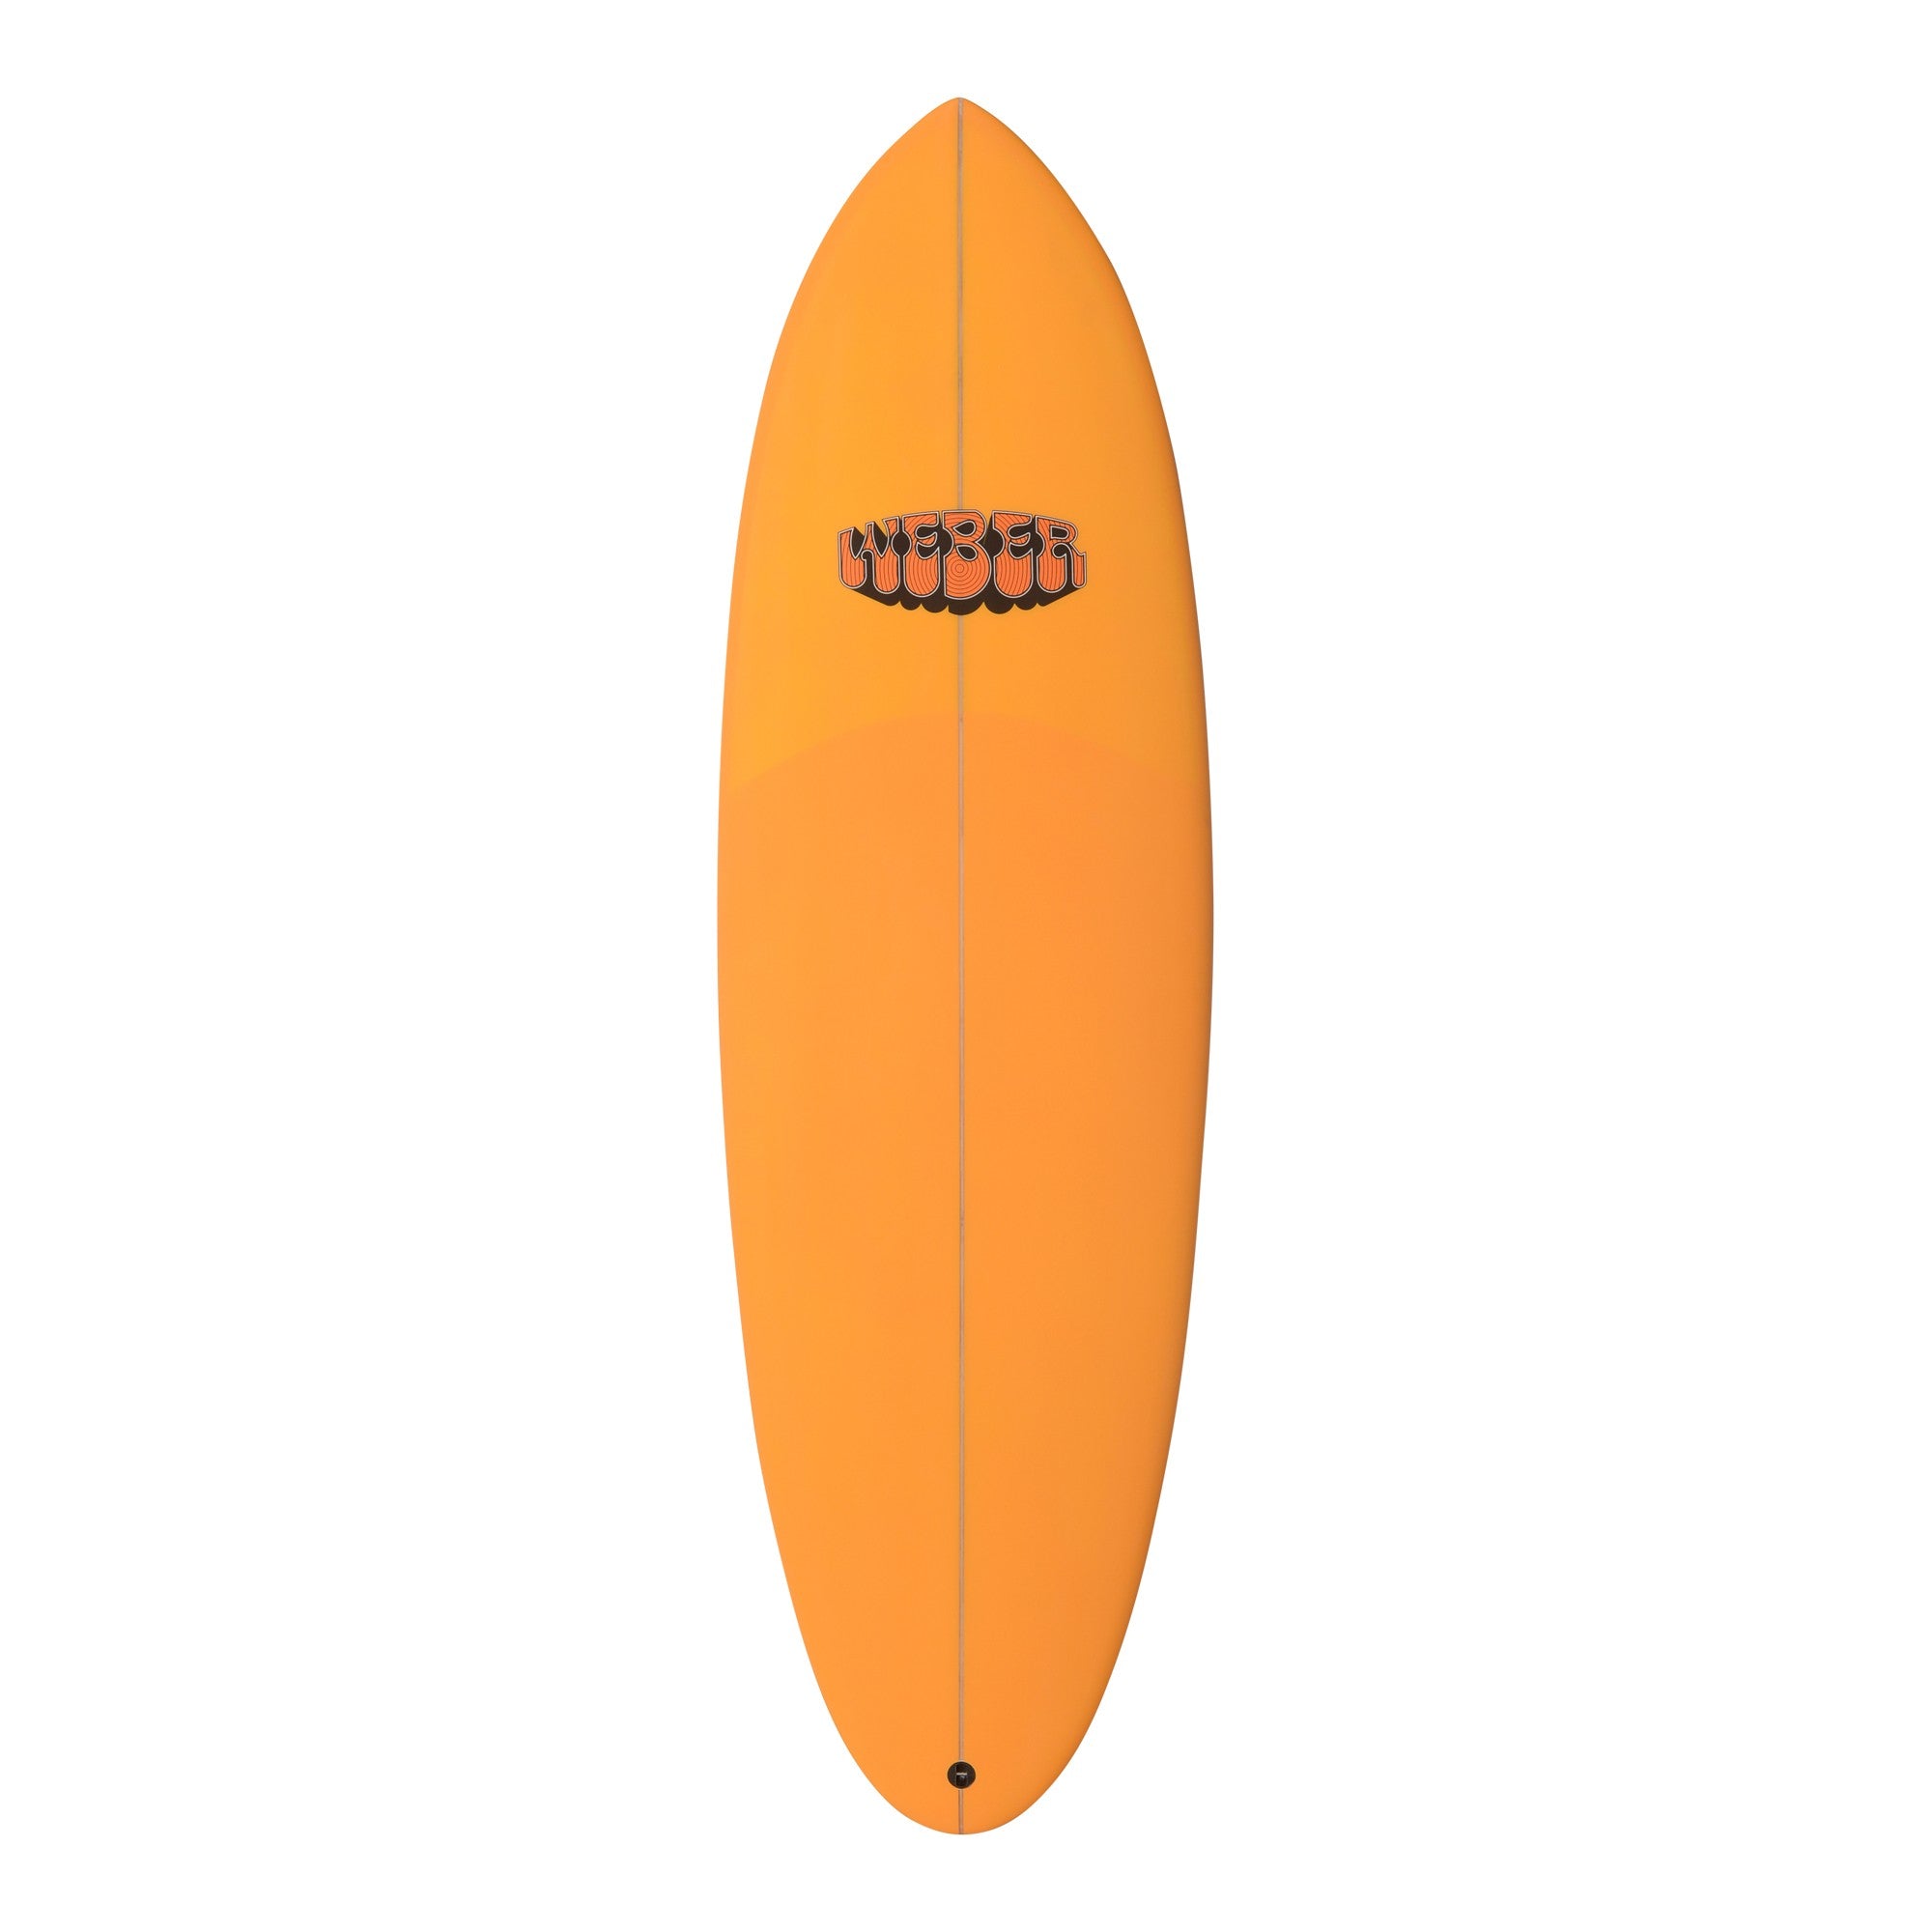 WEBER SURFBOARDS - Easy Rider 6'6 - Orange